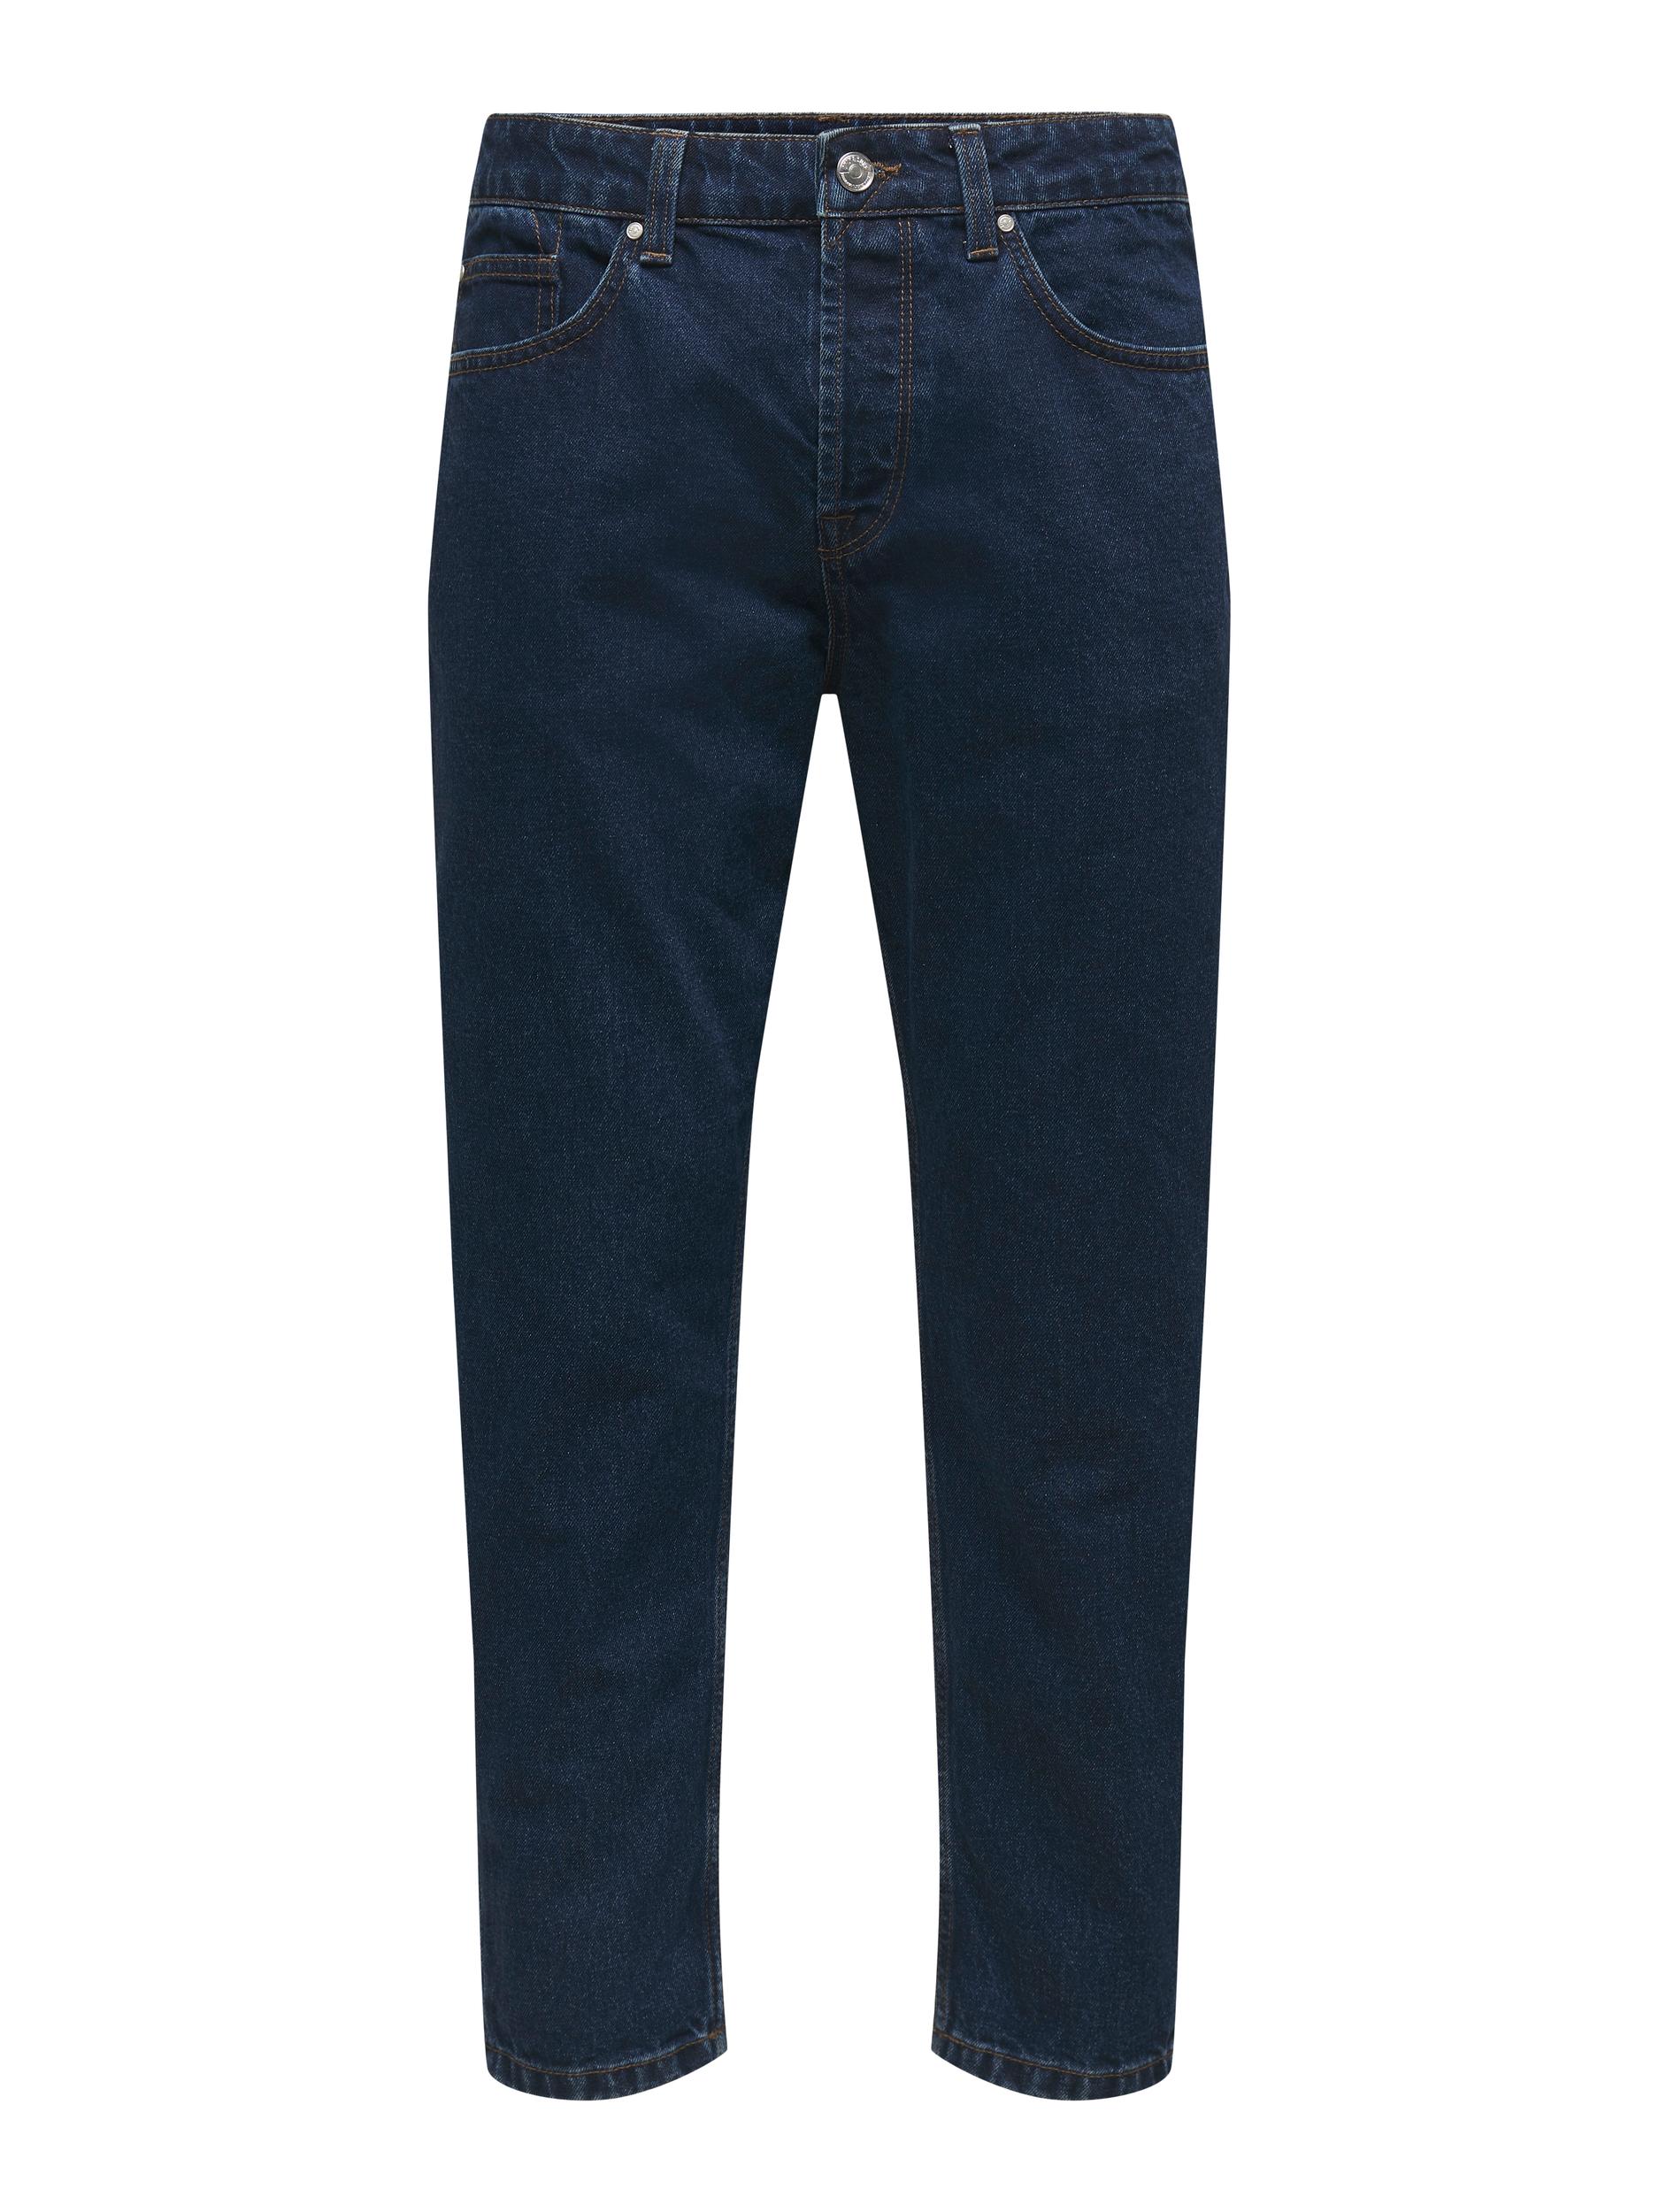 ONLY Avi Beam Life Jeans, Blue Denim, W32/L30